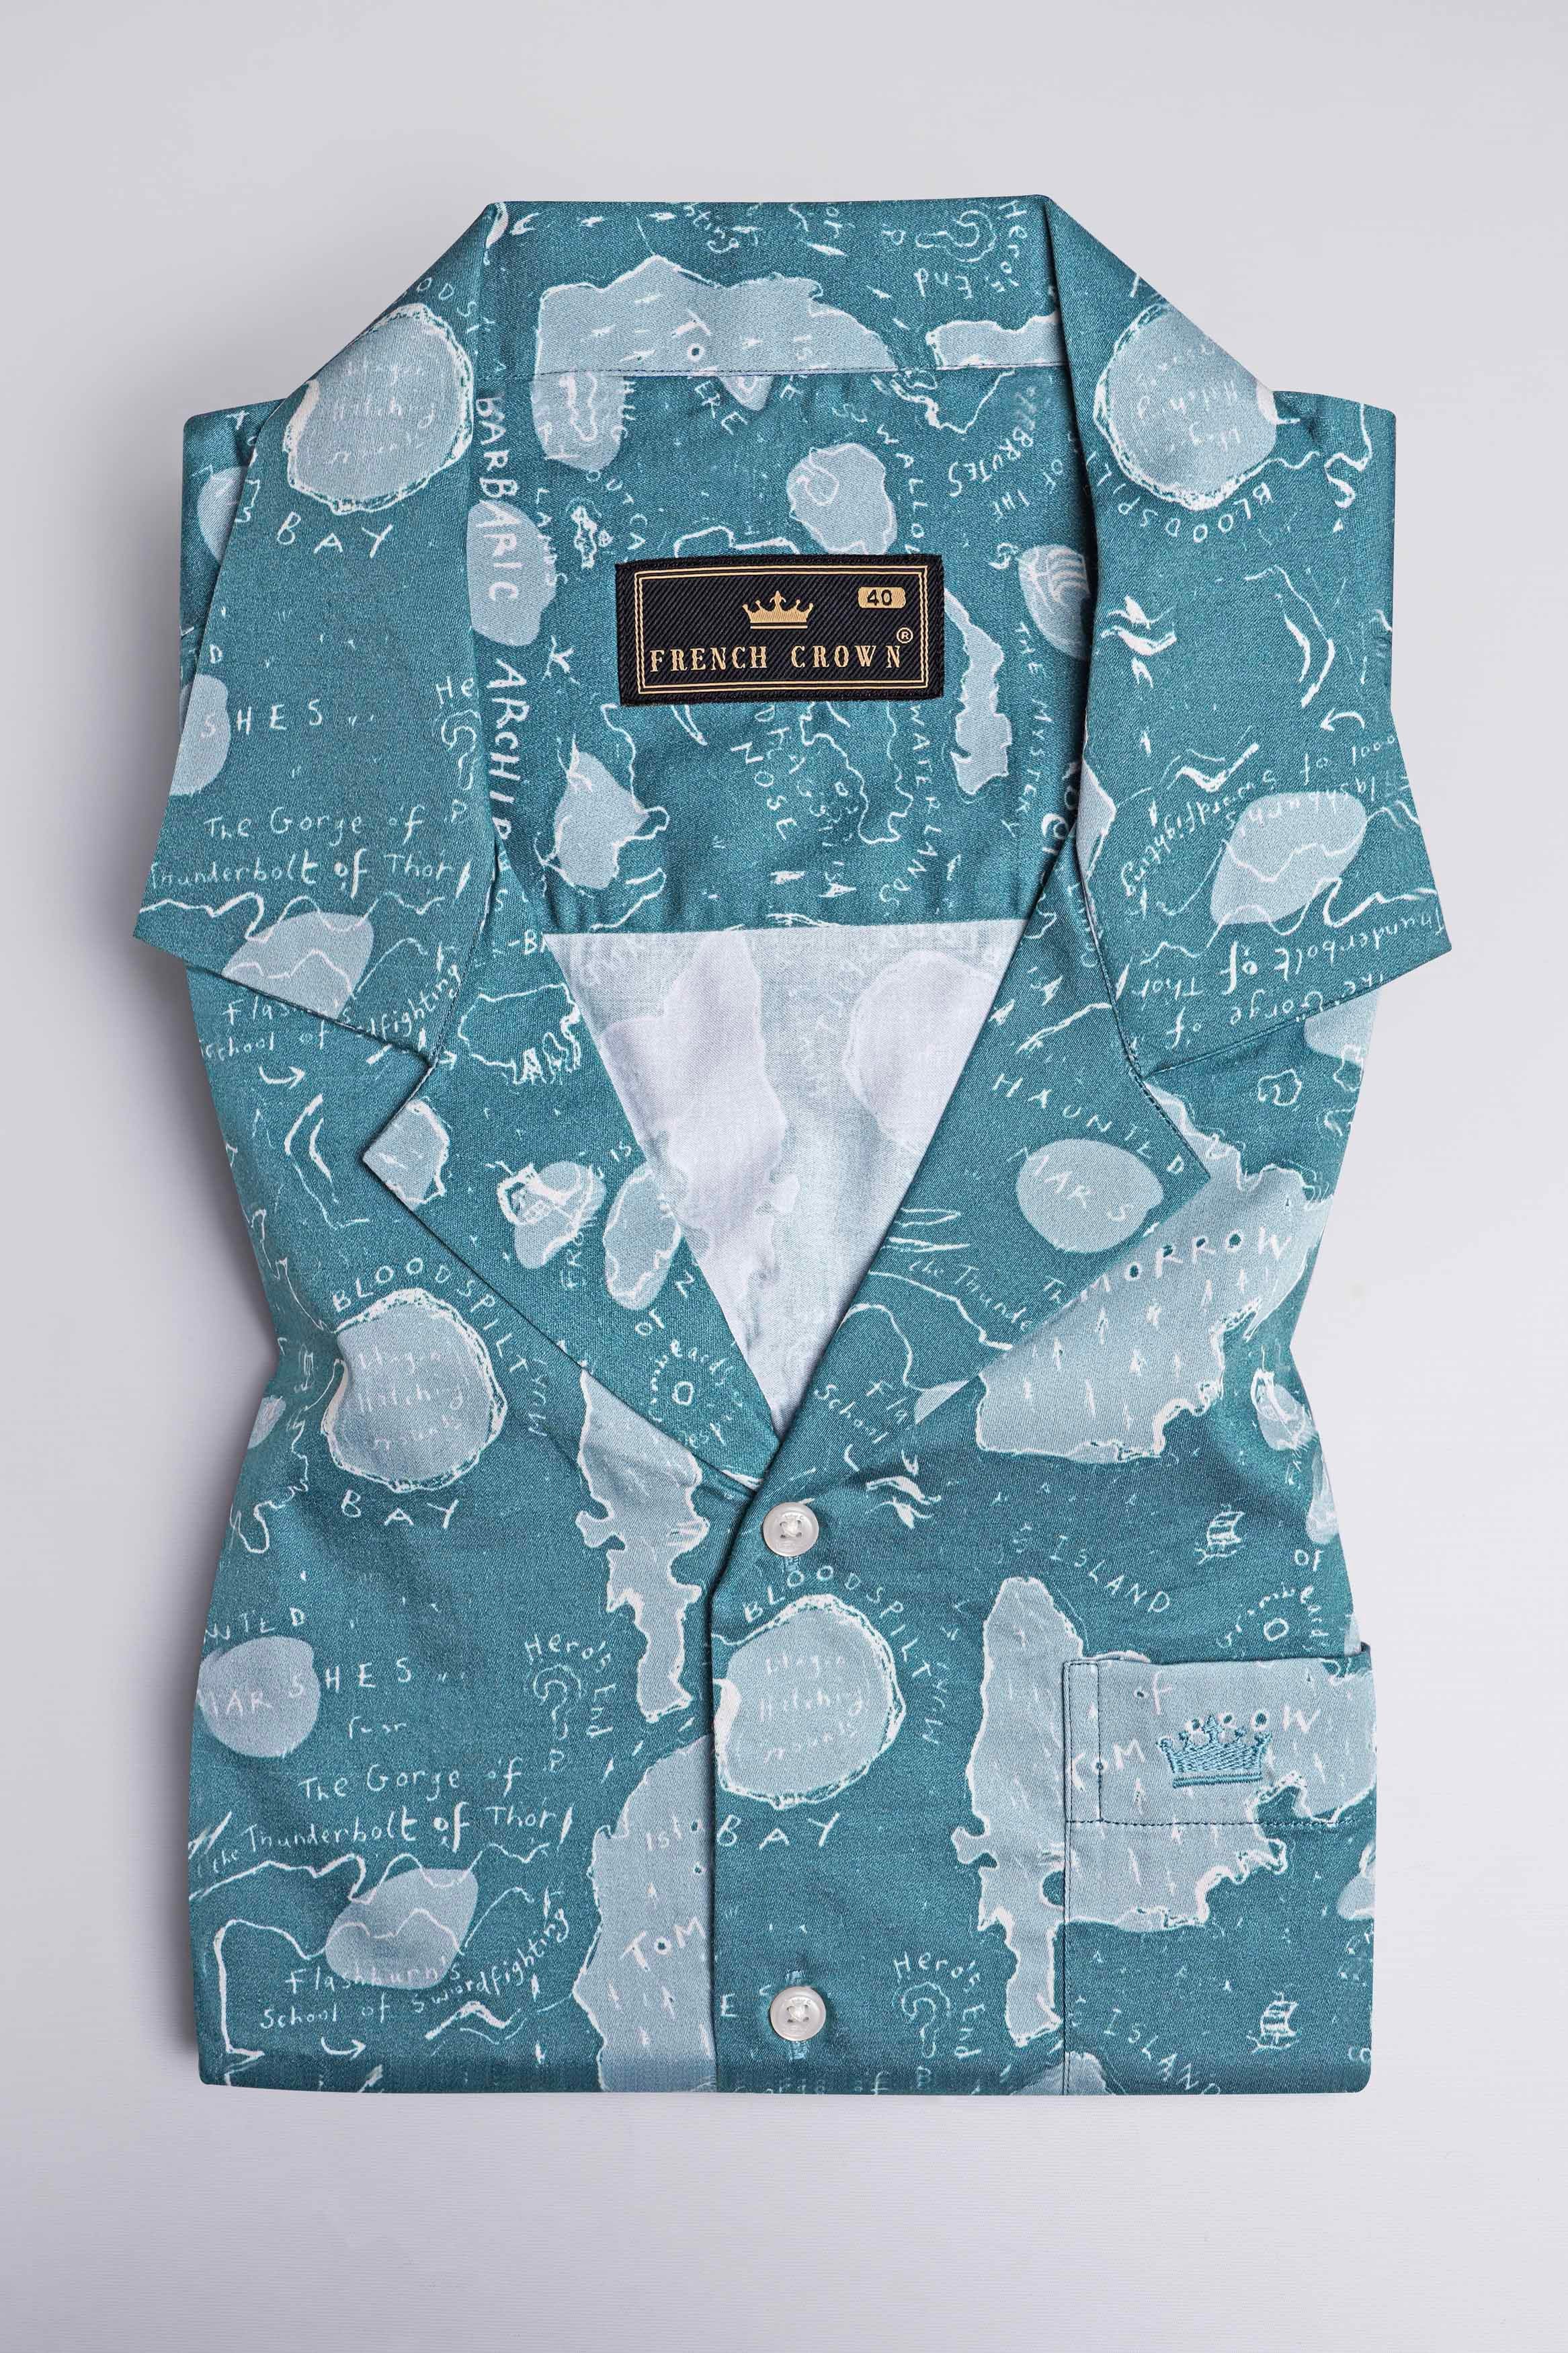 Blumine with Casper Gray Funky Printed Super Soft Premium Cotton Shirt